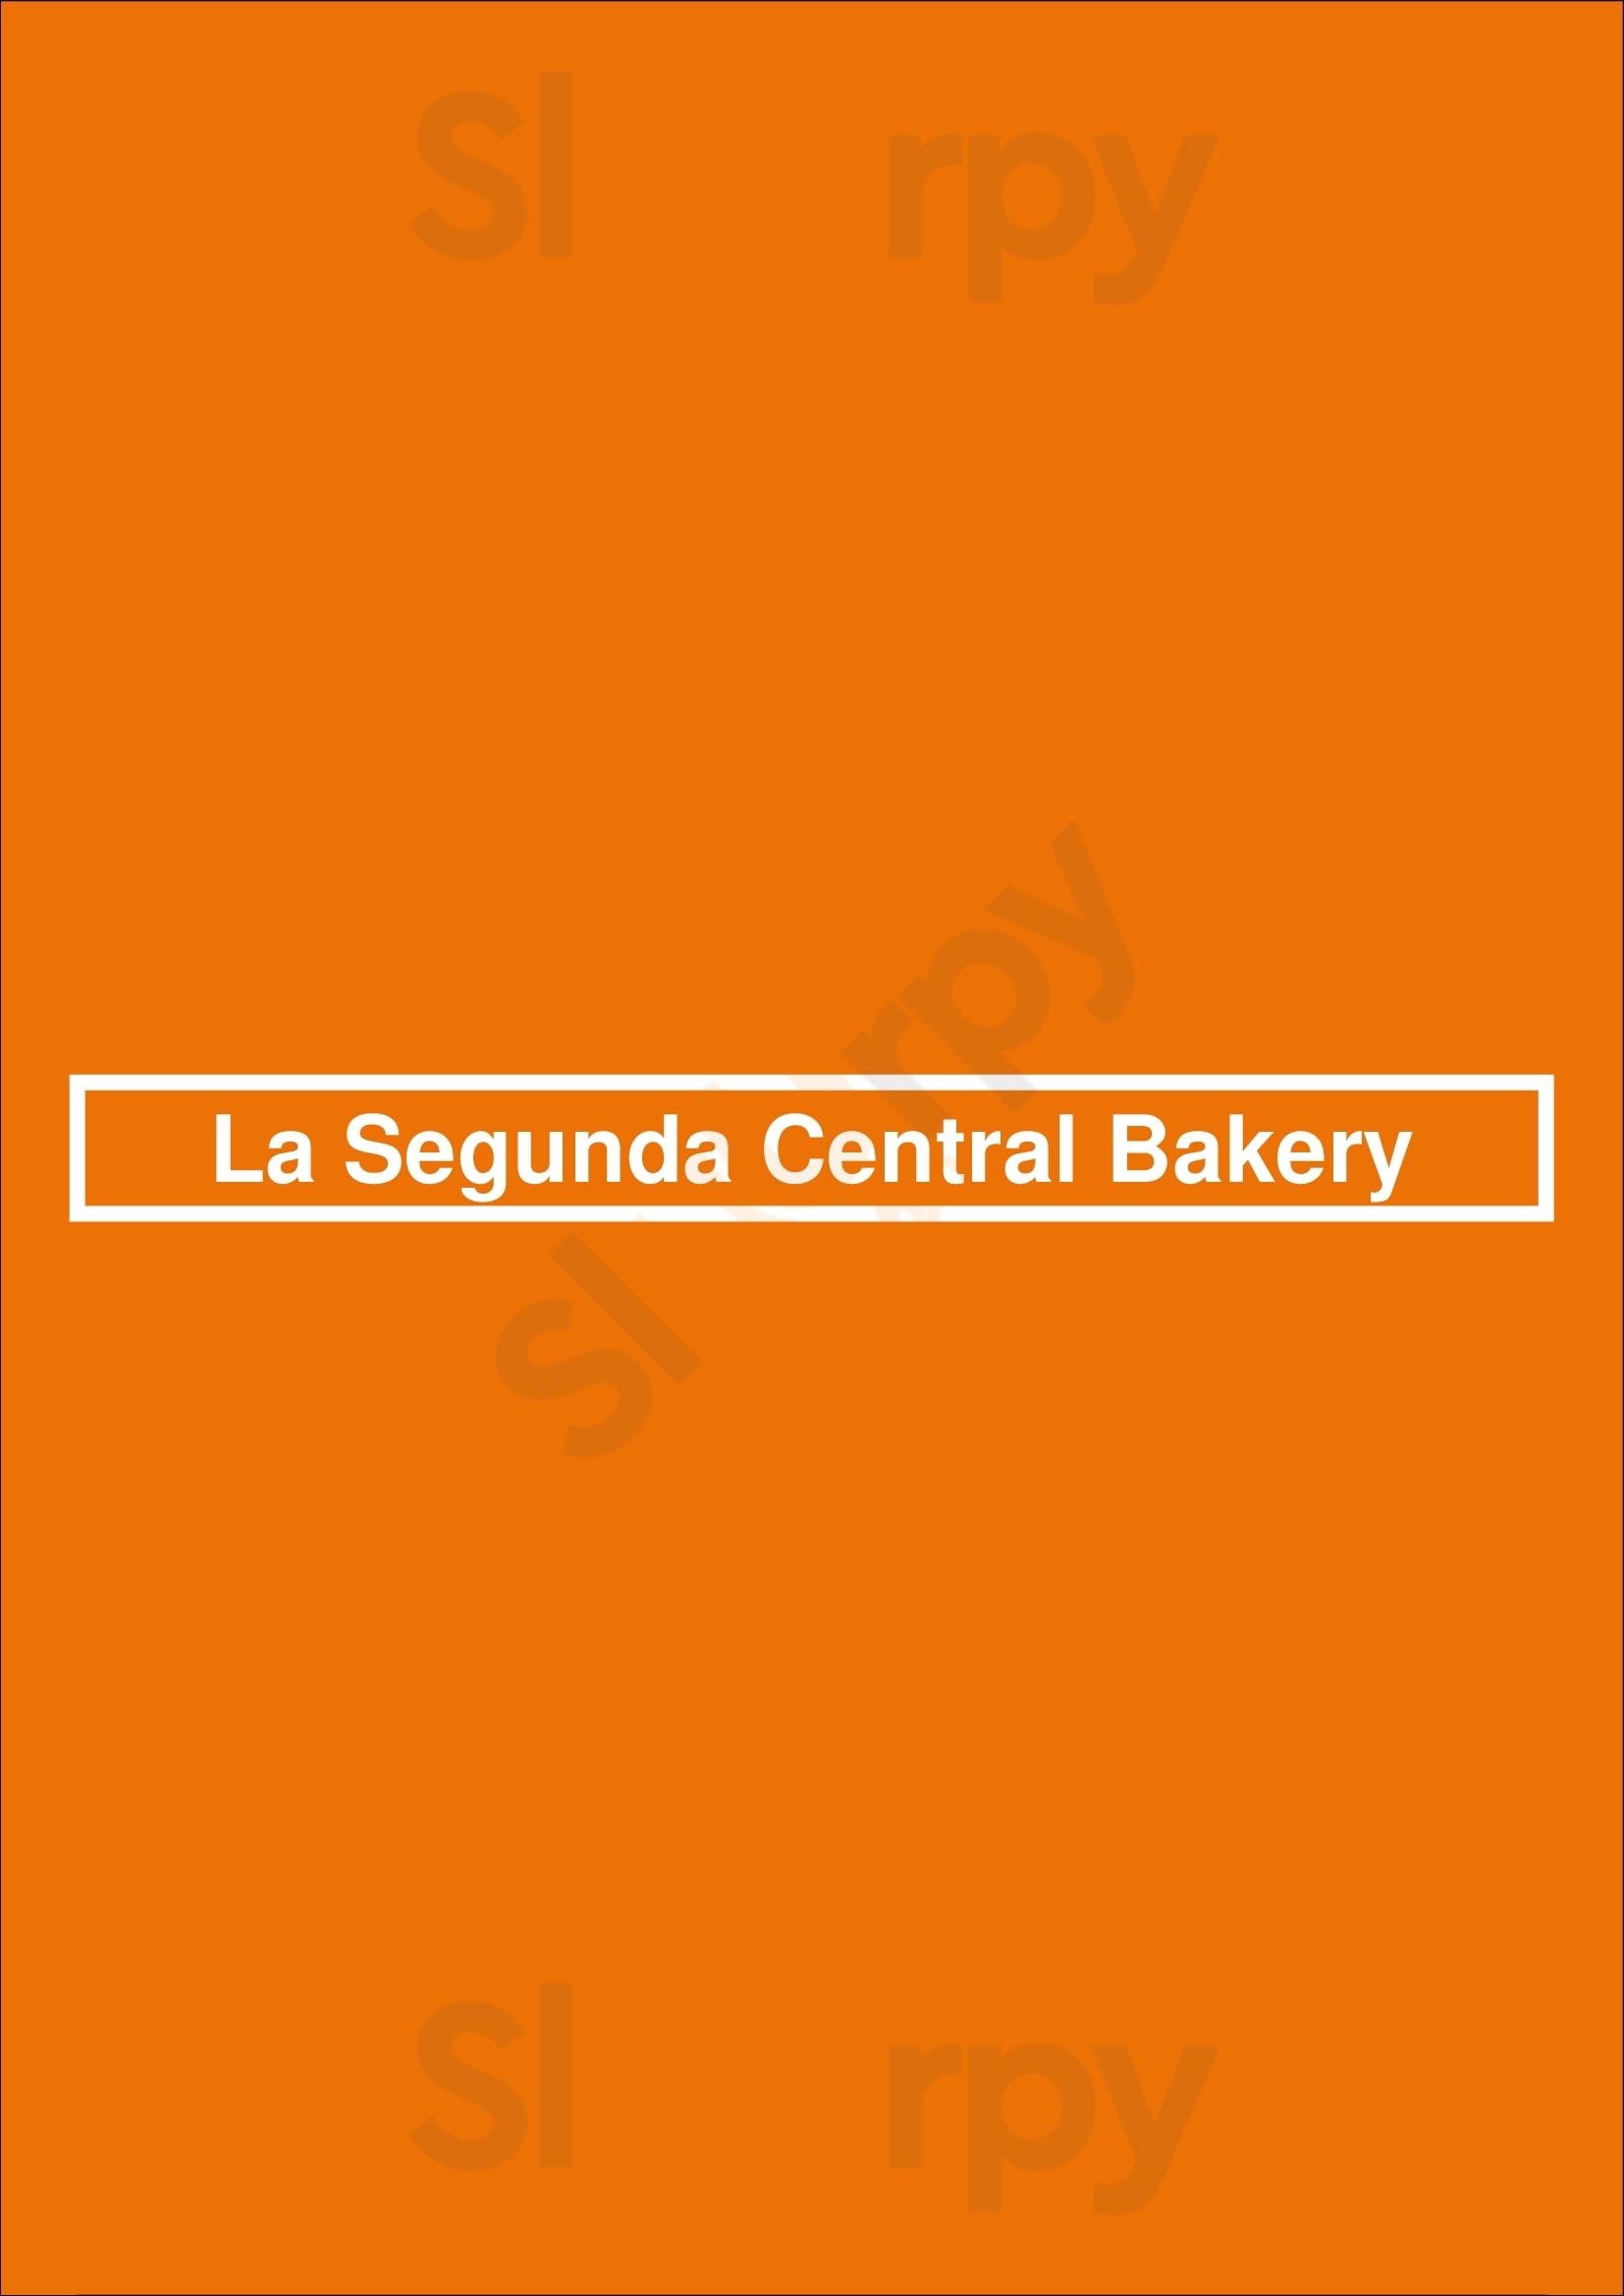 La Segunda Central Bakery Tampa Menu - 1